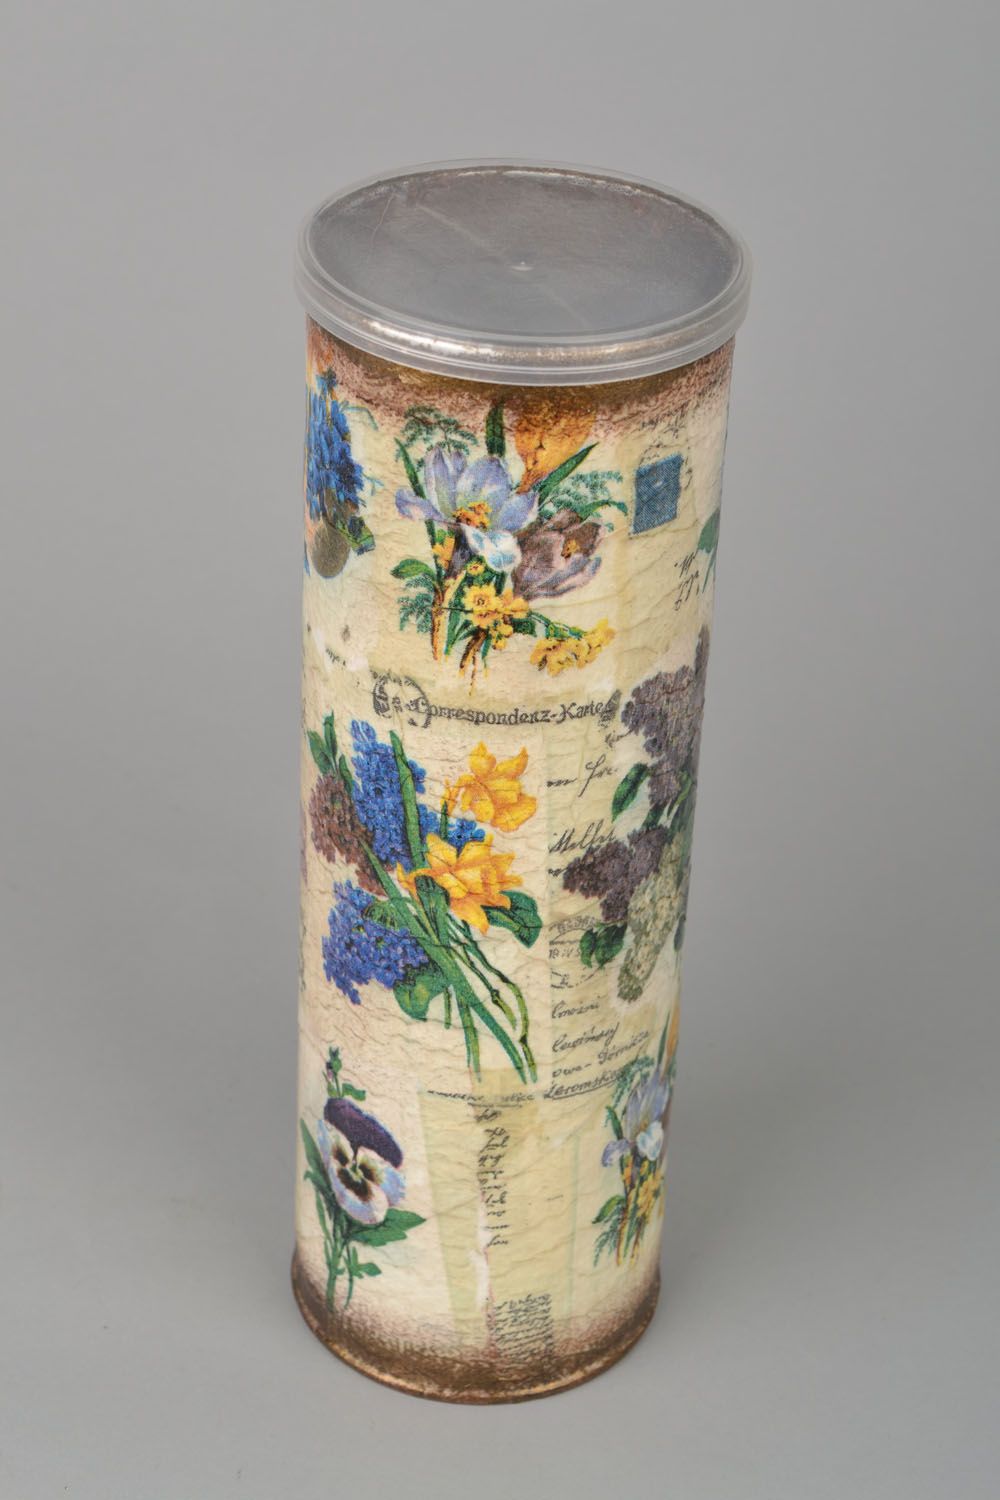 15 oz decorative handmade jar in floral design with lid 0,15 lb photo 3